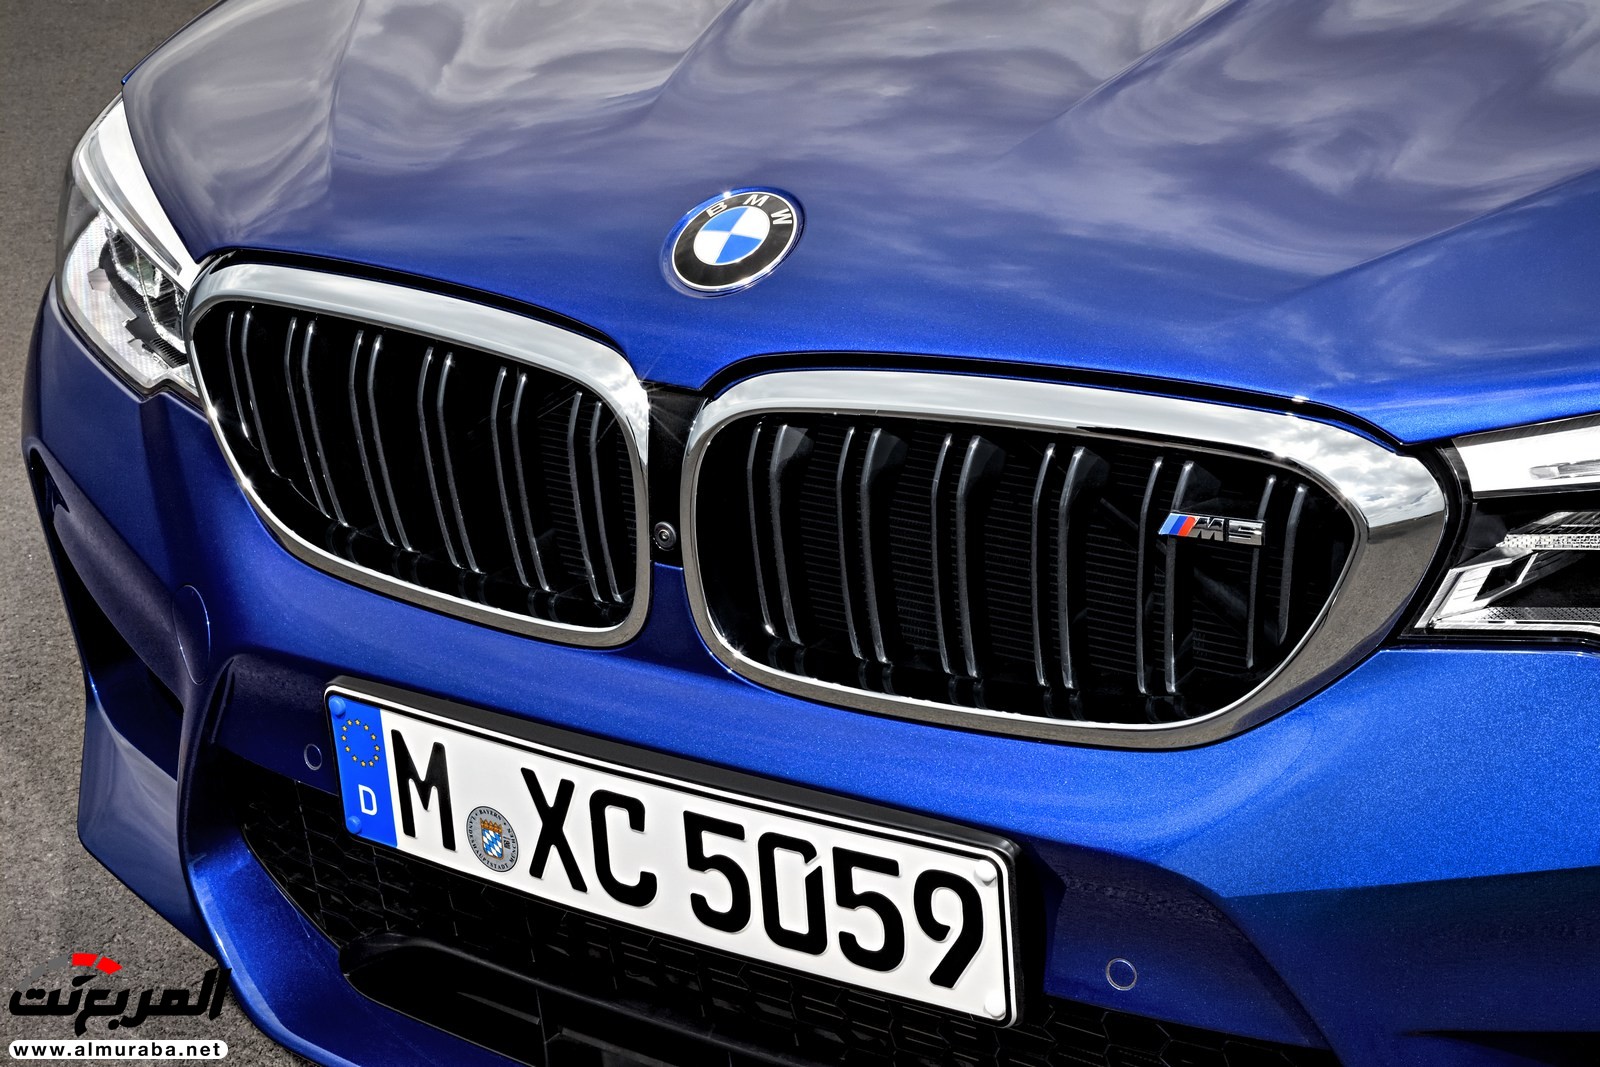 بي ام دبليو M5 2018 تكشف نفسها رسمياً بقوة ٦٠٠ حصان "صور ومواصفات" BMW 163